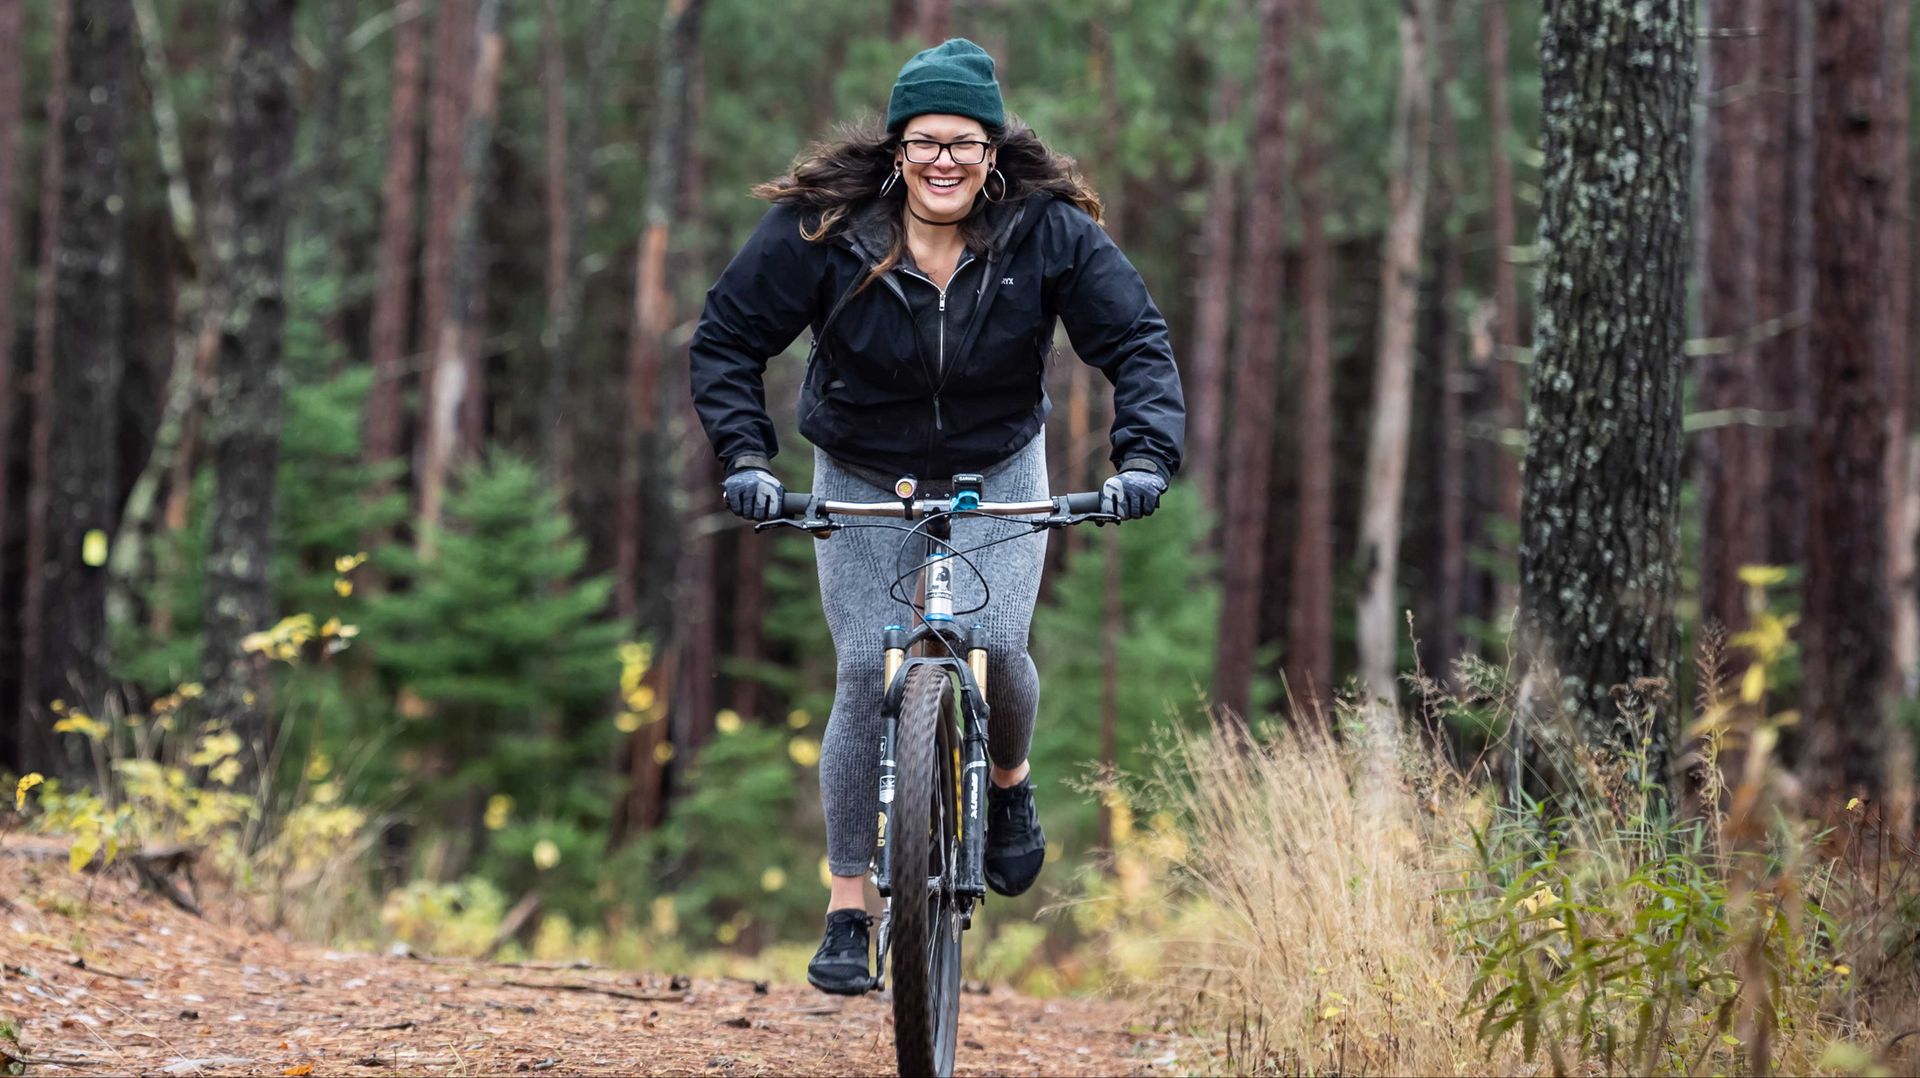 Alexandera Houchin riding her bike at the Cloquet Forestry Center in Cloquet, MN, on Oct 22, 2019.